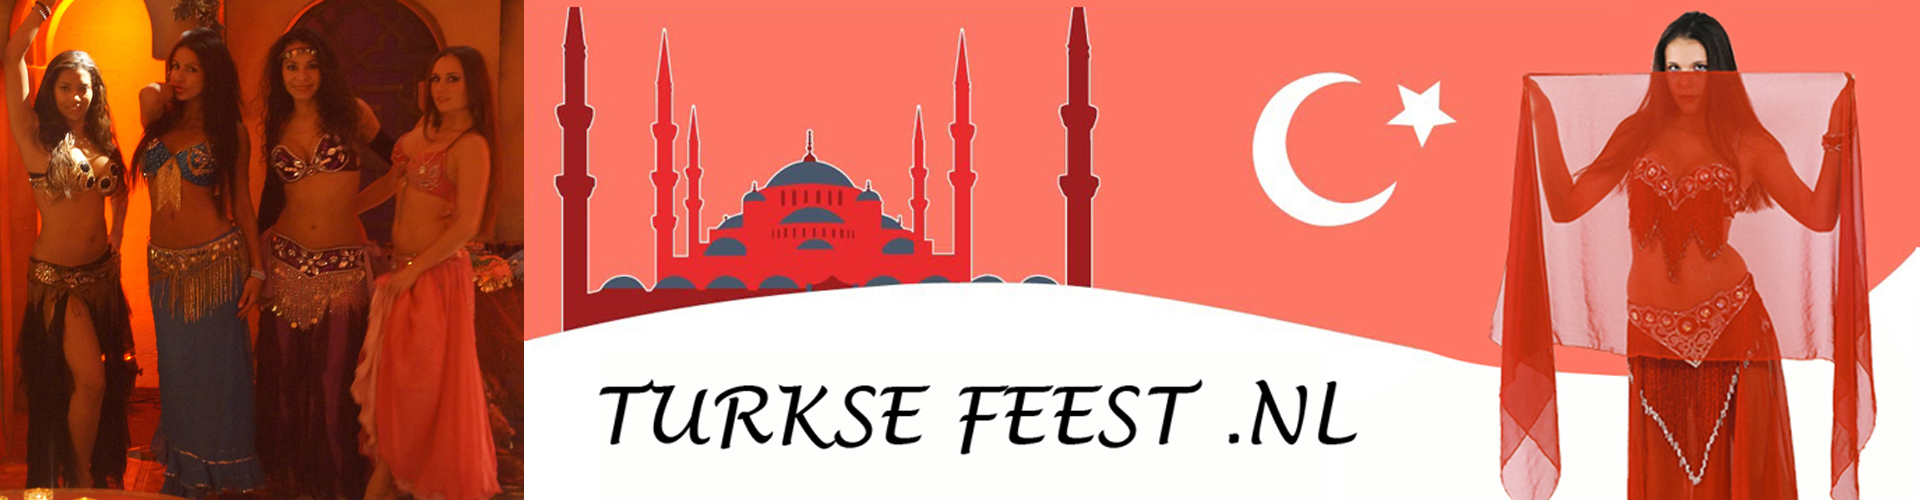 Turkse feest decoratie